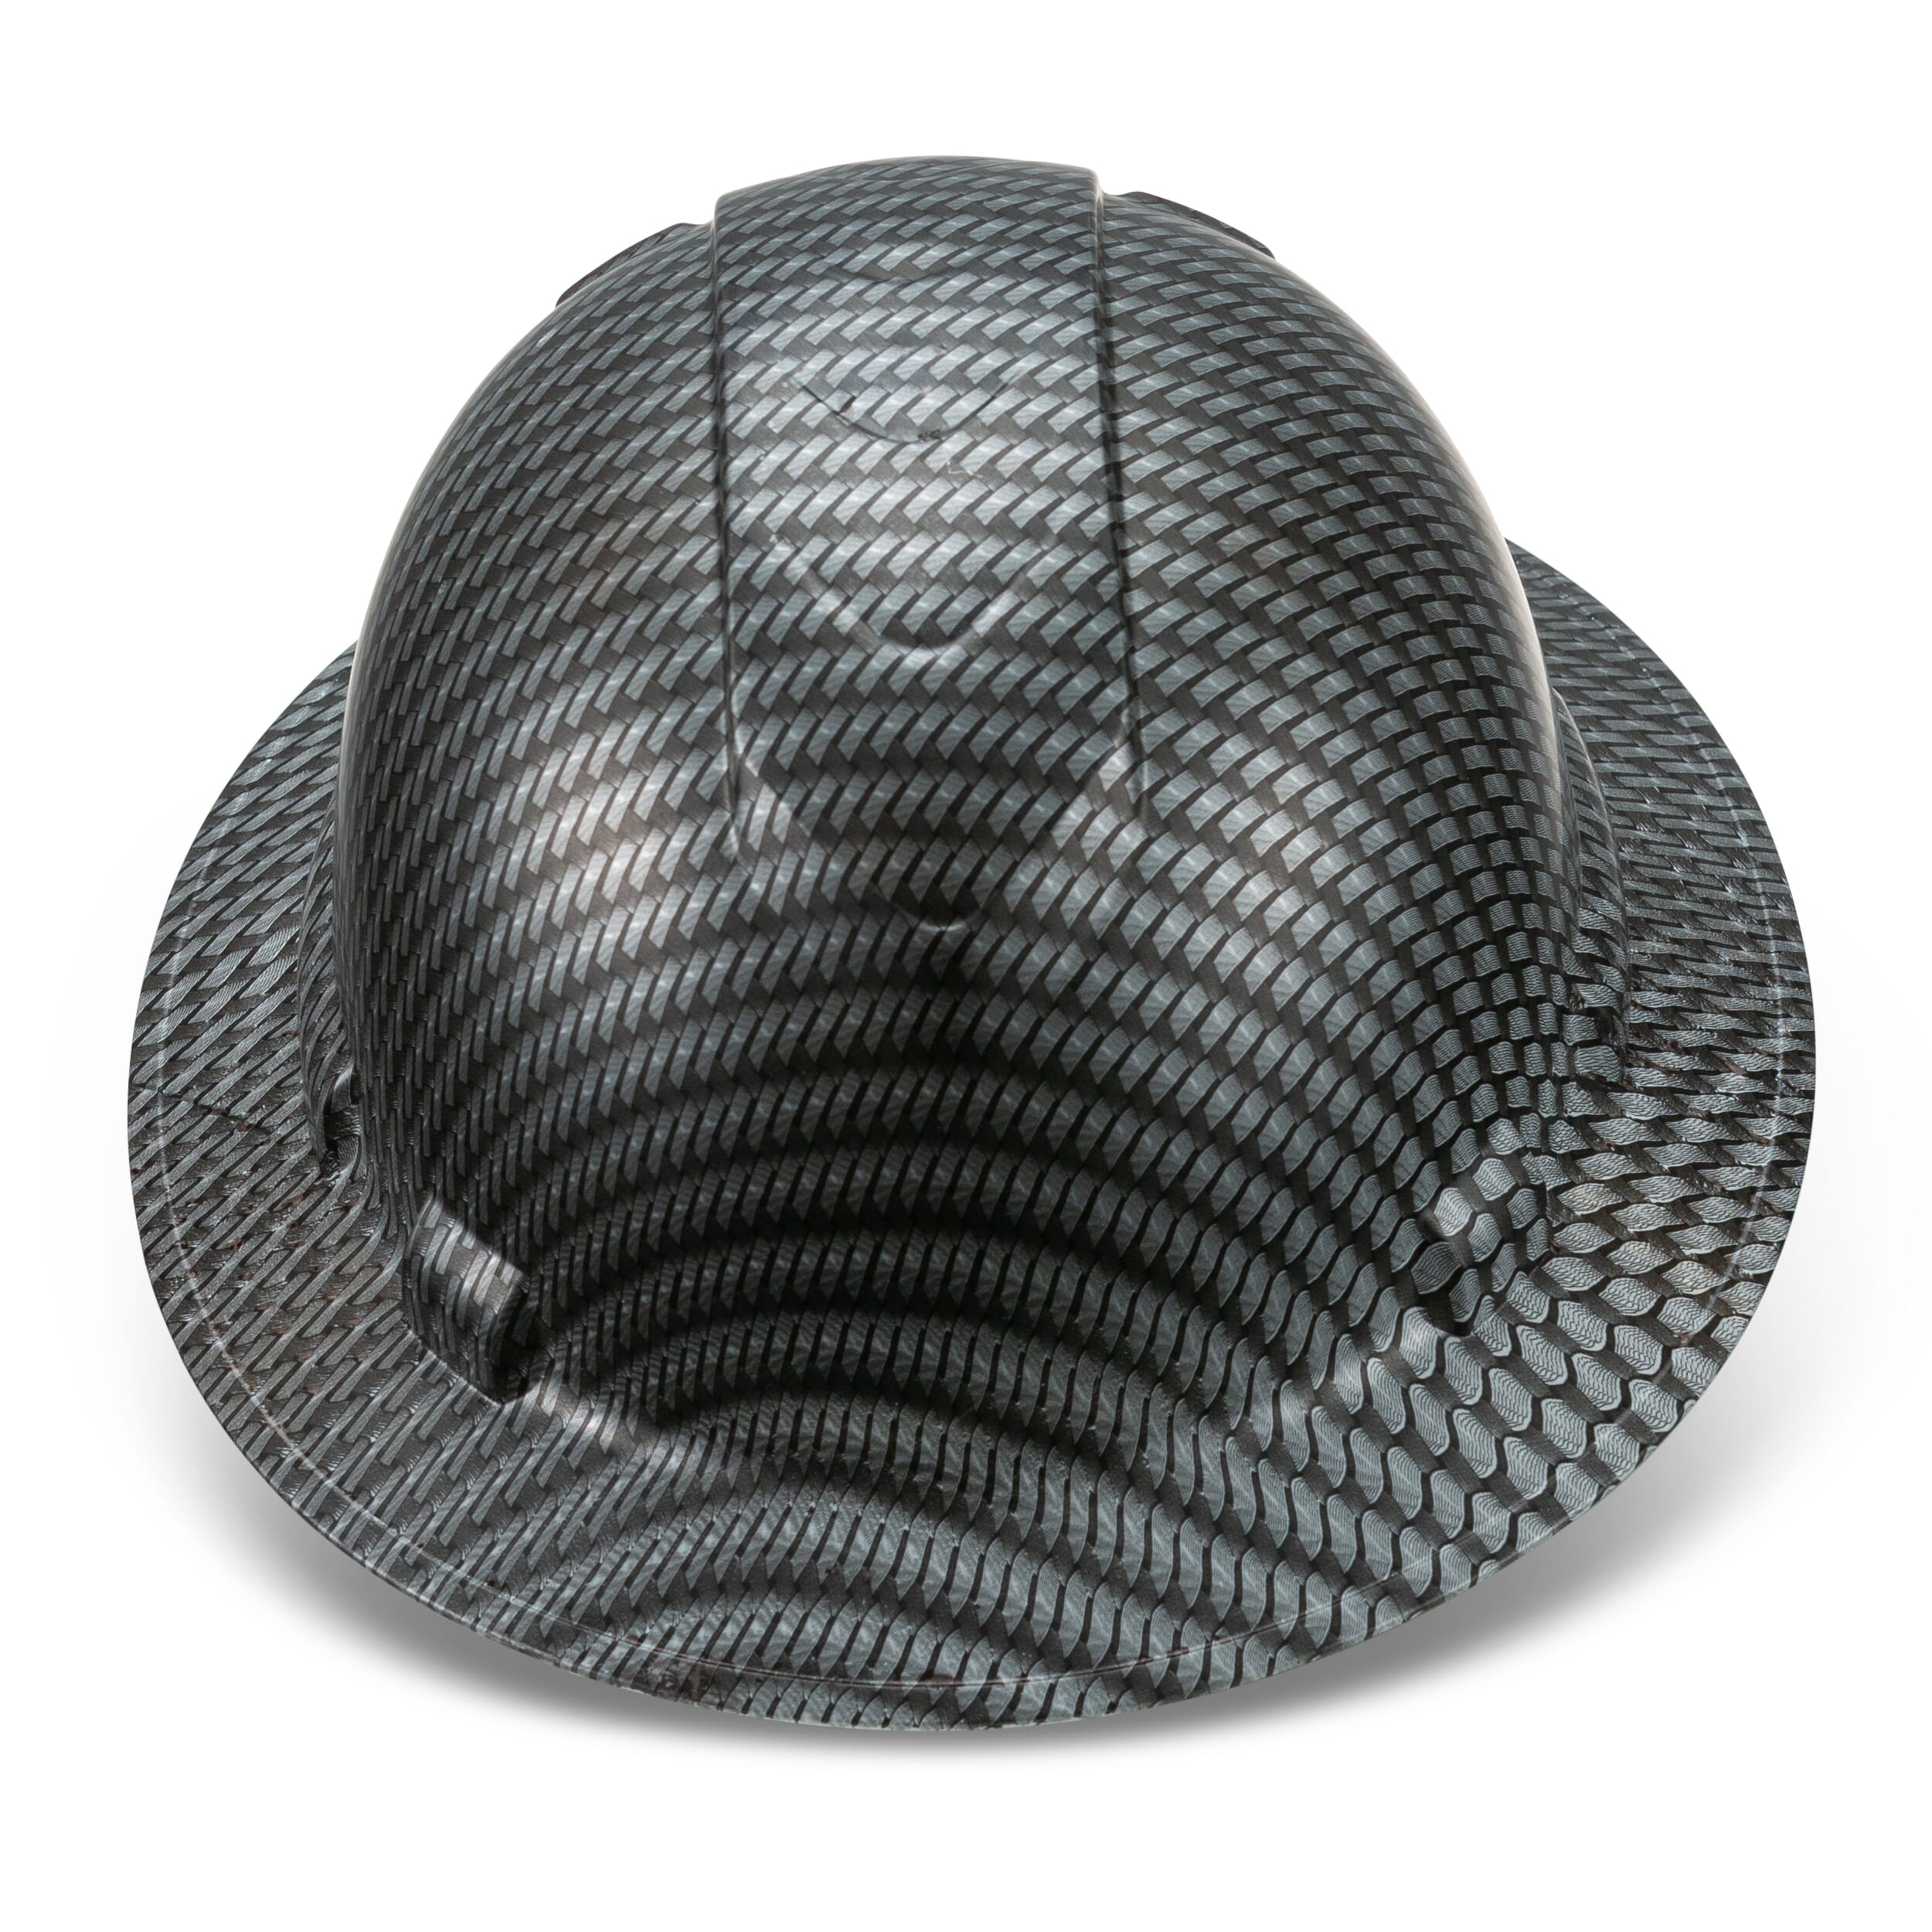 Full Brim Pyramex Hard Hat, Custom Metal Wicker Design, Safety Helmet, 6 Point